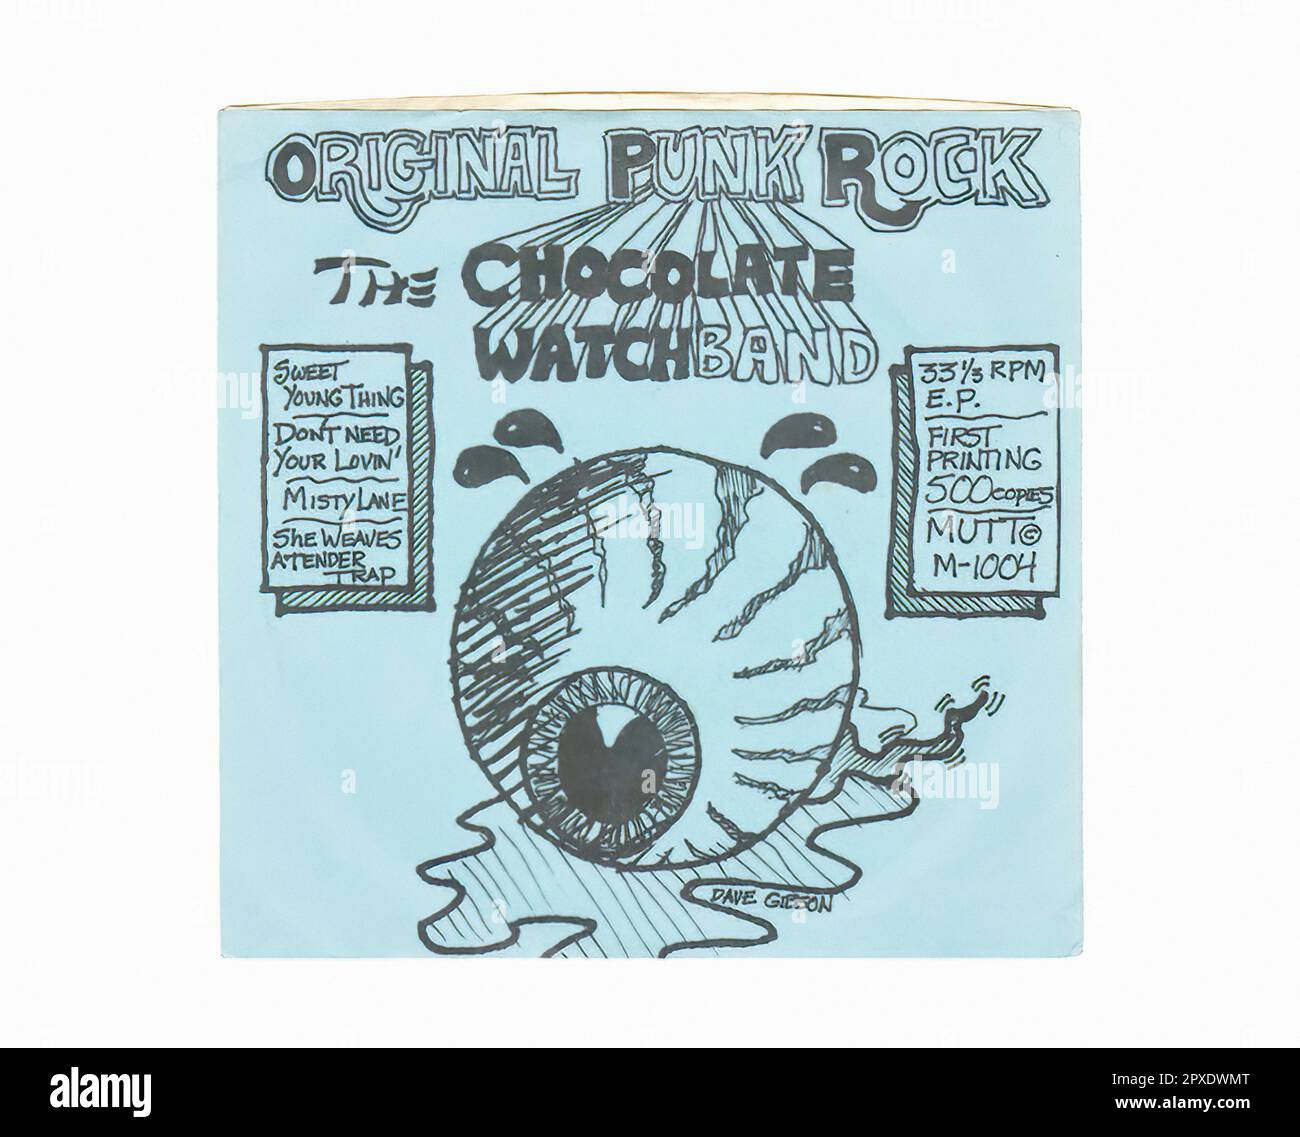 Chocolate Watchband - 1995 01-1 A - Vintage 45 R.P.M Music Vinyl Record Banque D'Images